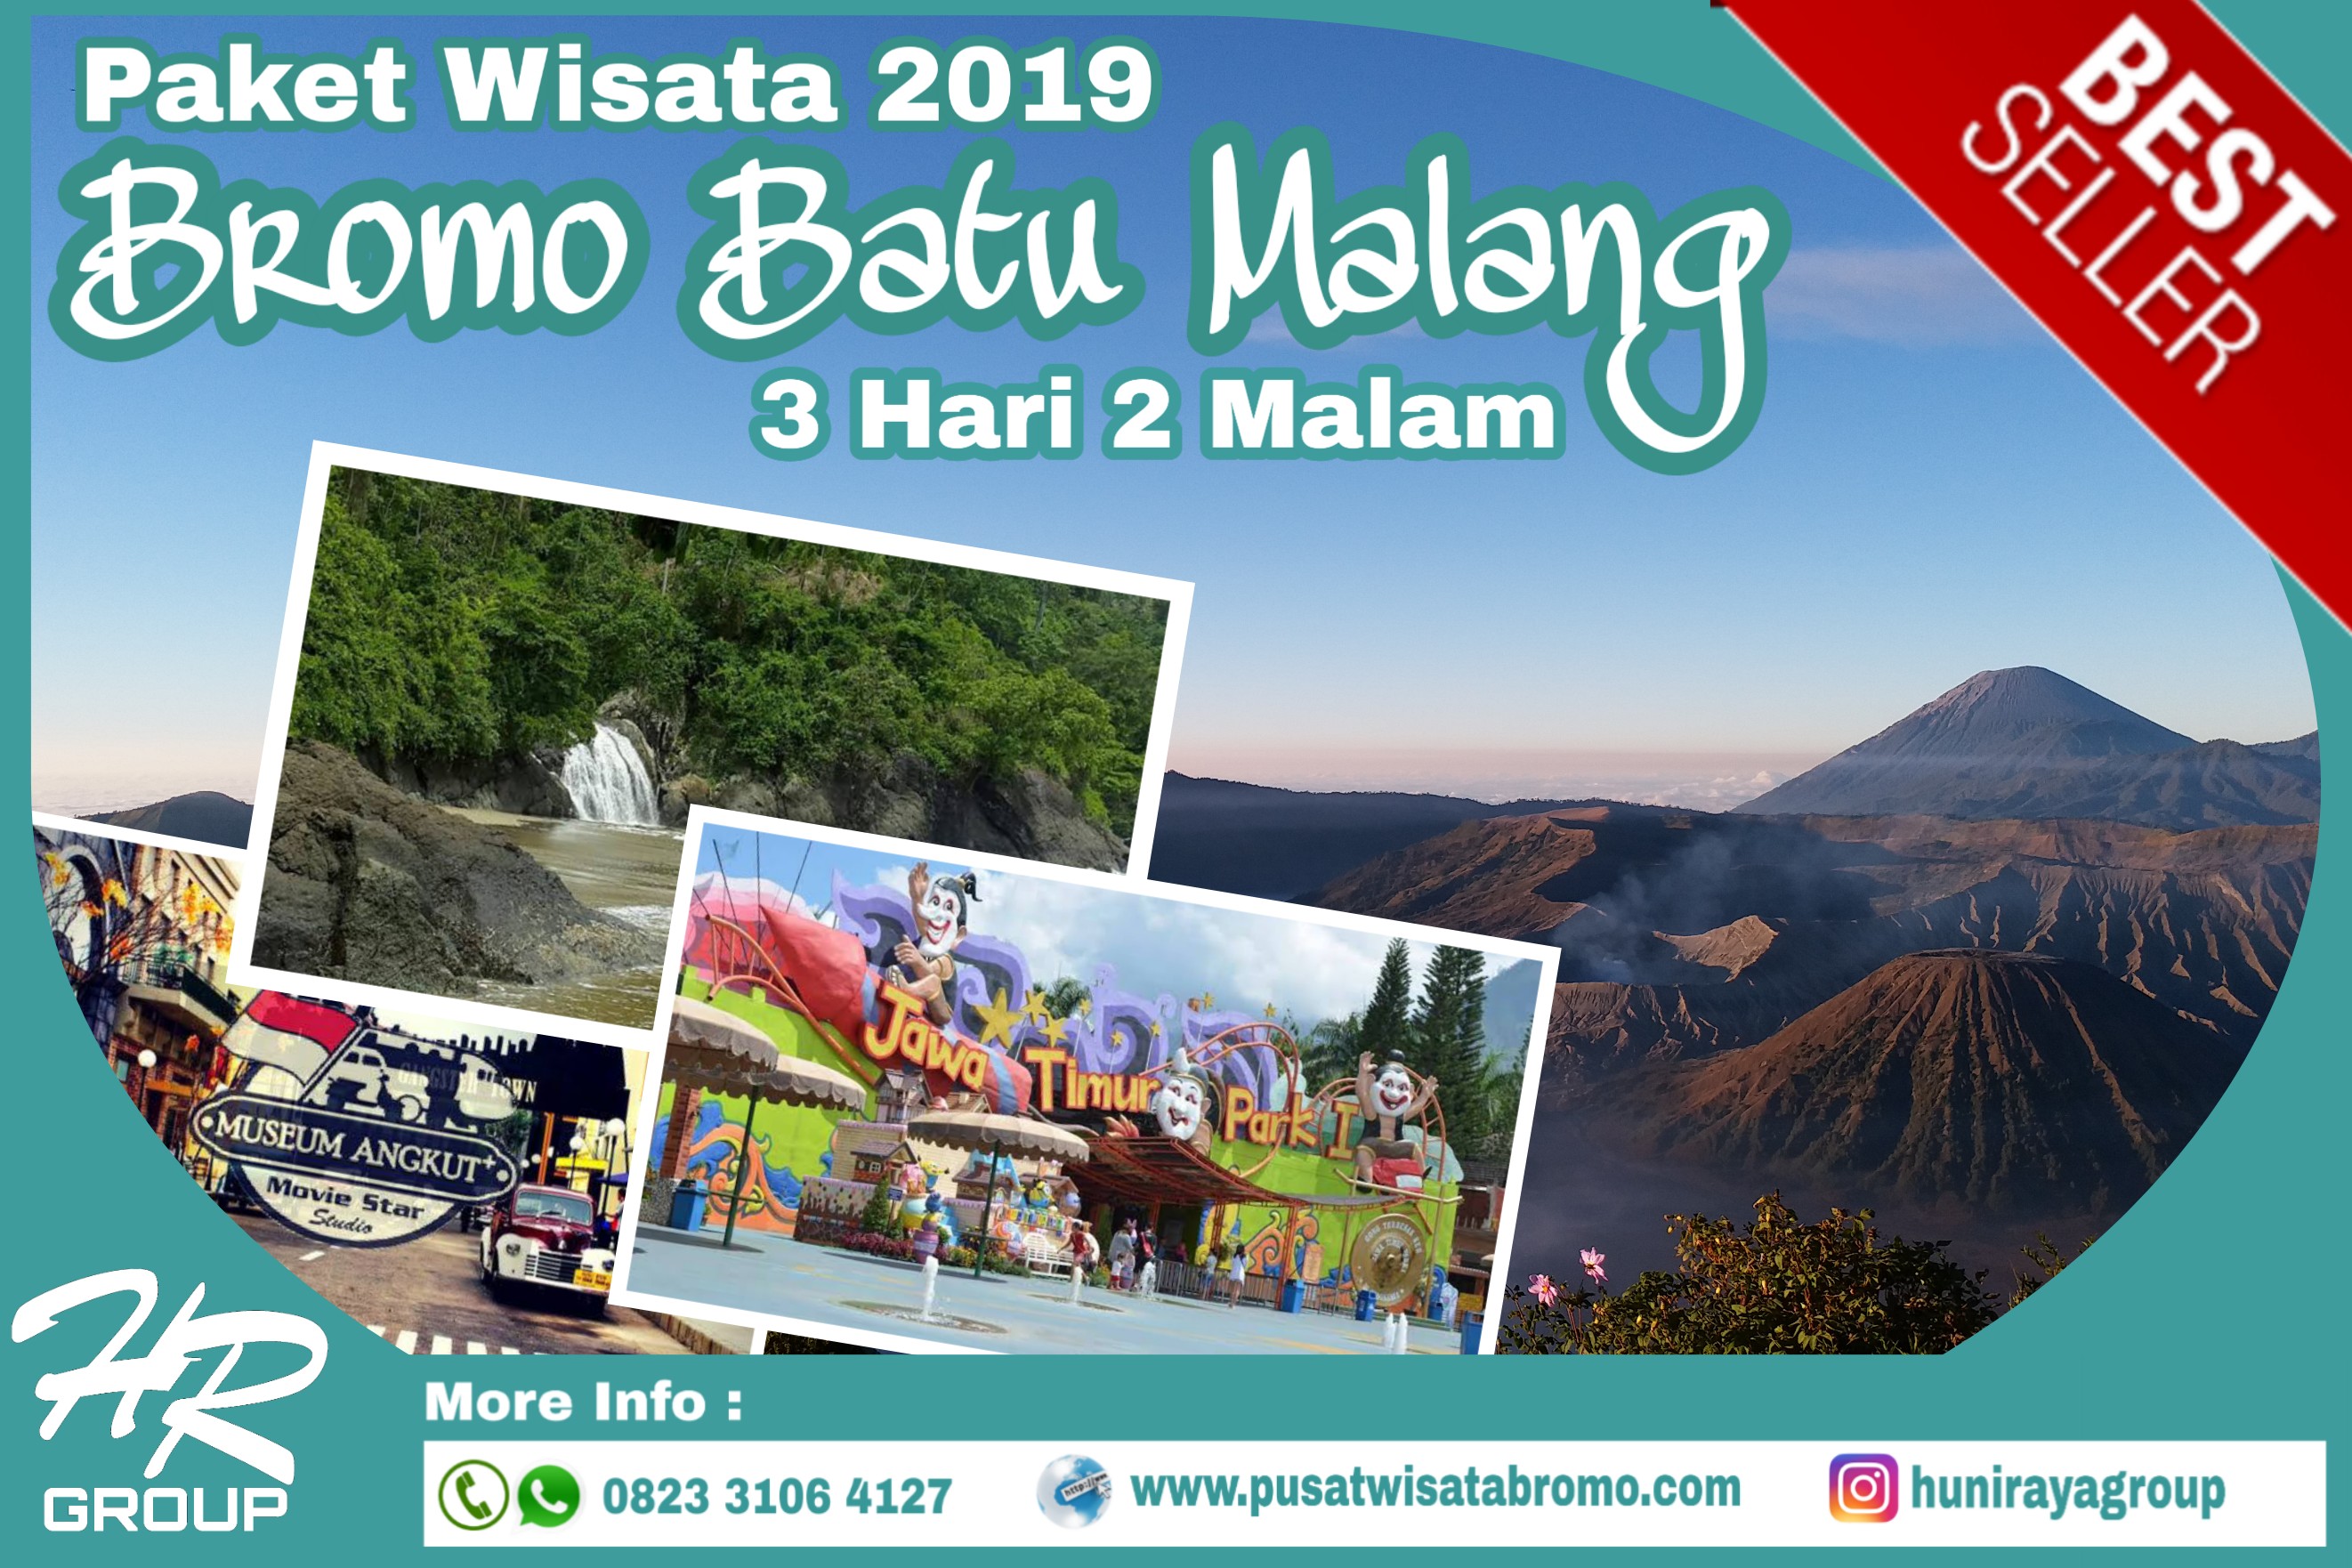 Paket Wisata Bromo Malang Batu 3 Hari 2 Malam terbaru 2019 | PusatWisataBromo.com By Huni Raya Group